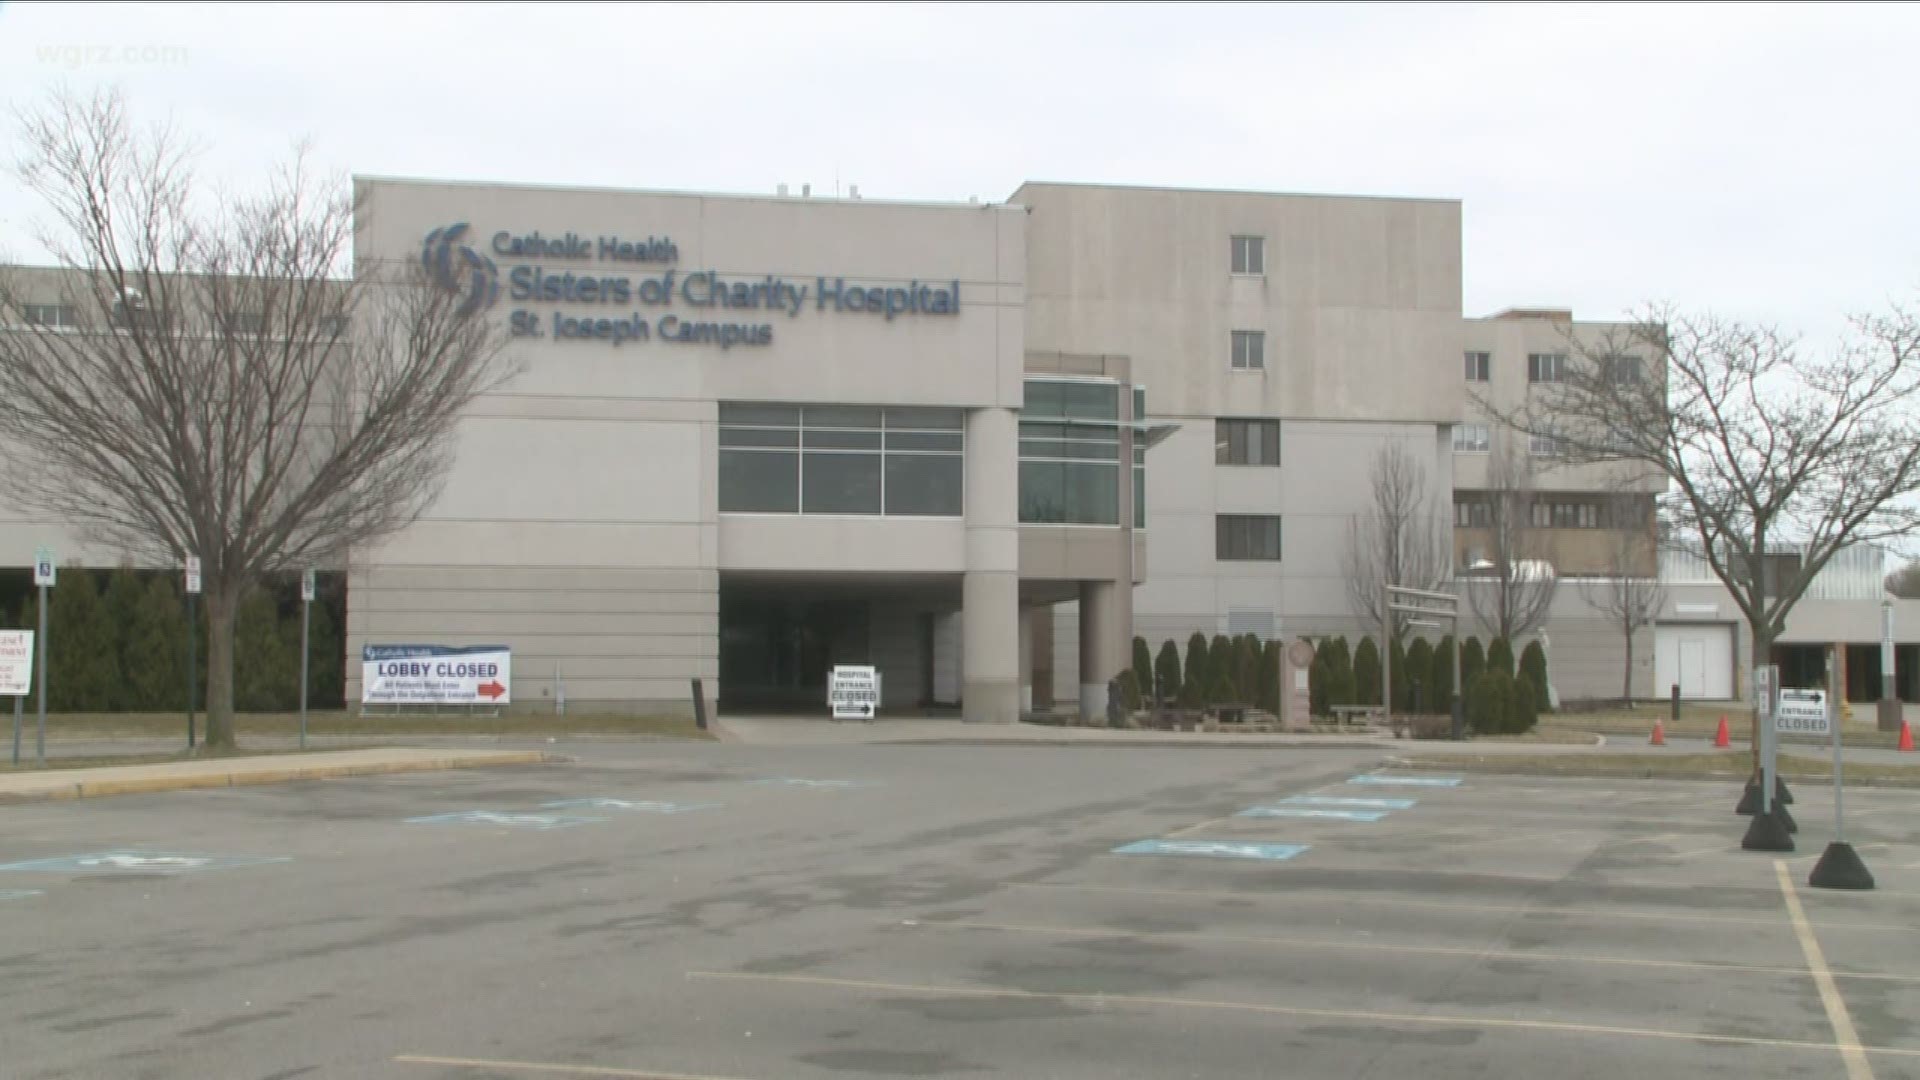 St Josephs hospital converts to treatment center